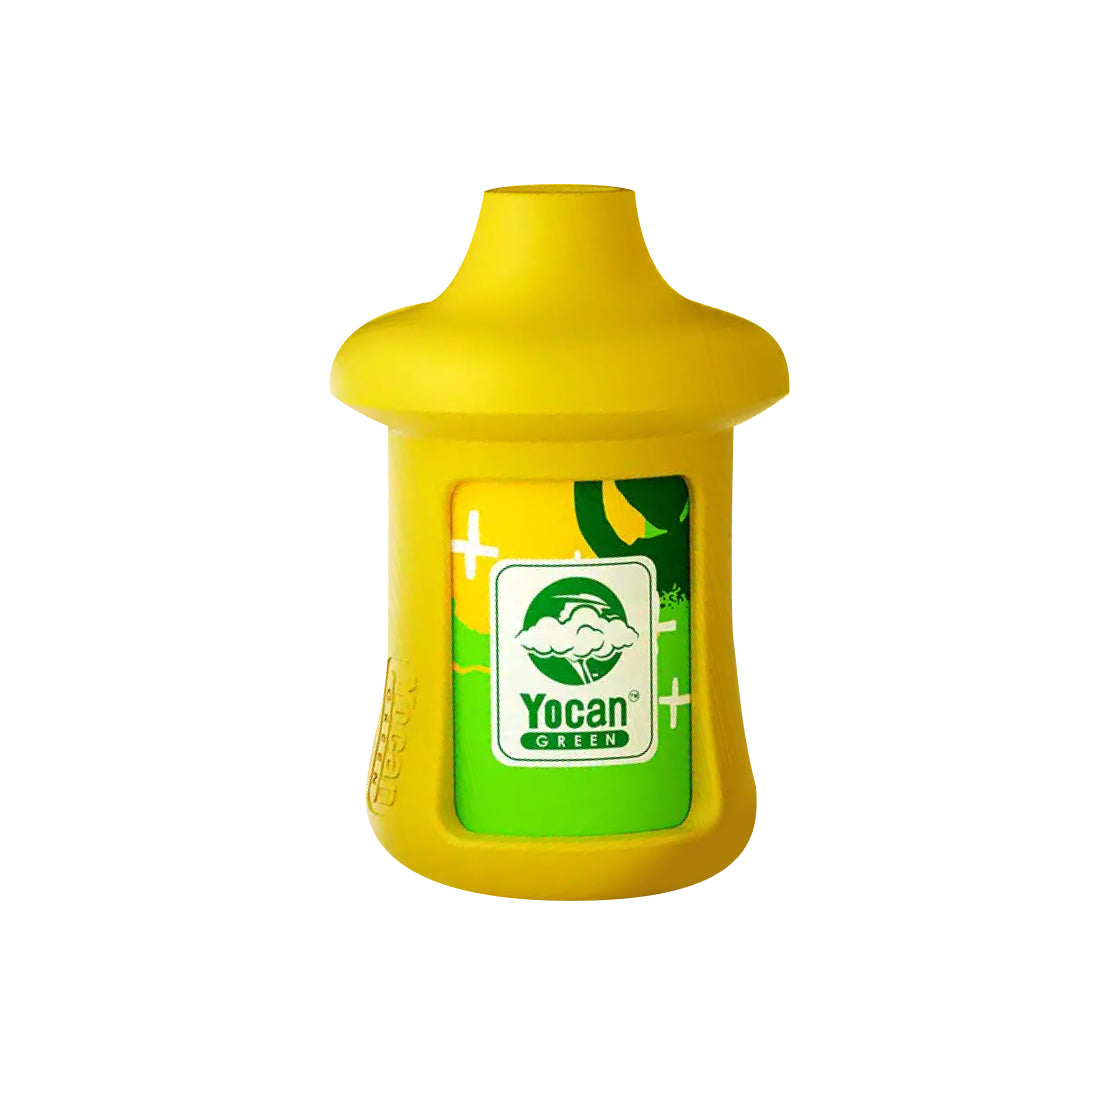 Yocan Green Mushroom Personal Air Filter - yellow